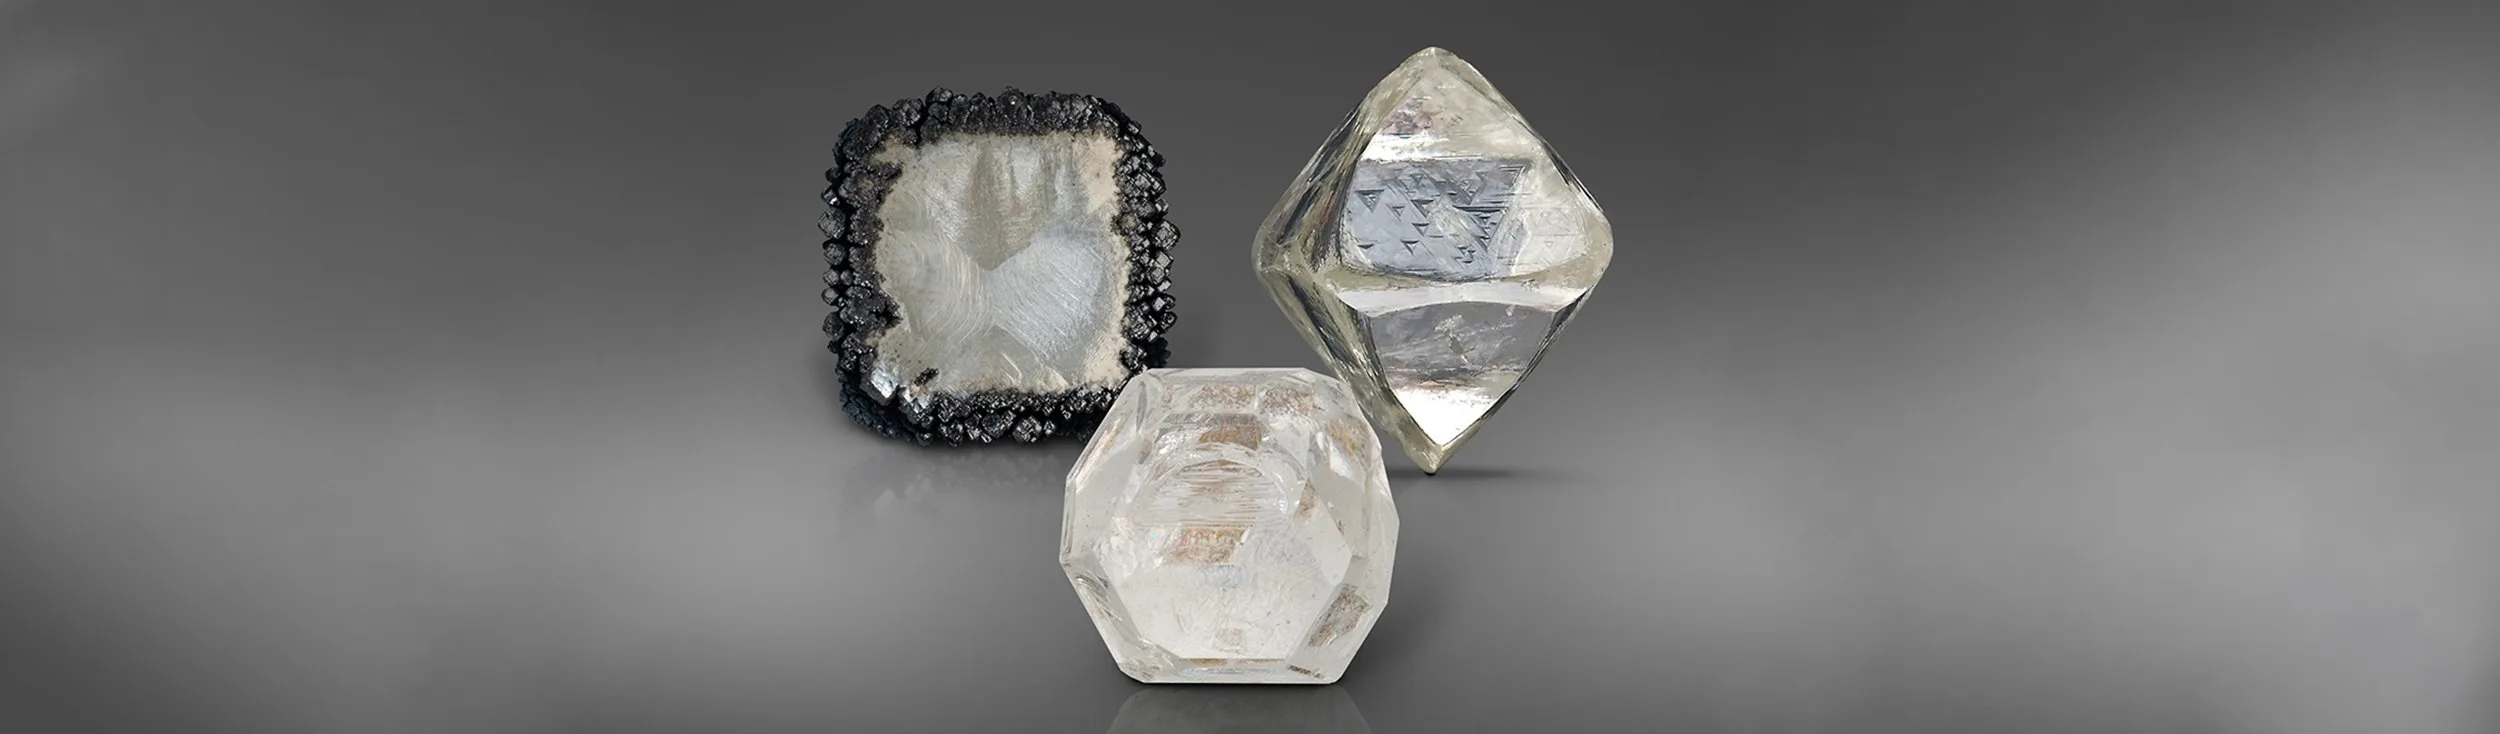 Overview of Lab Diamonds vs Natural Diamonds Lab Diamonds Have Fewer Impurities